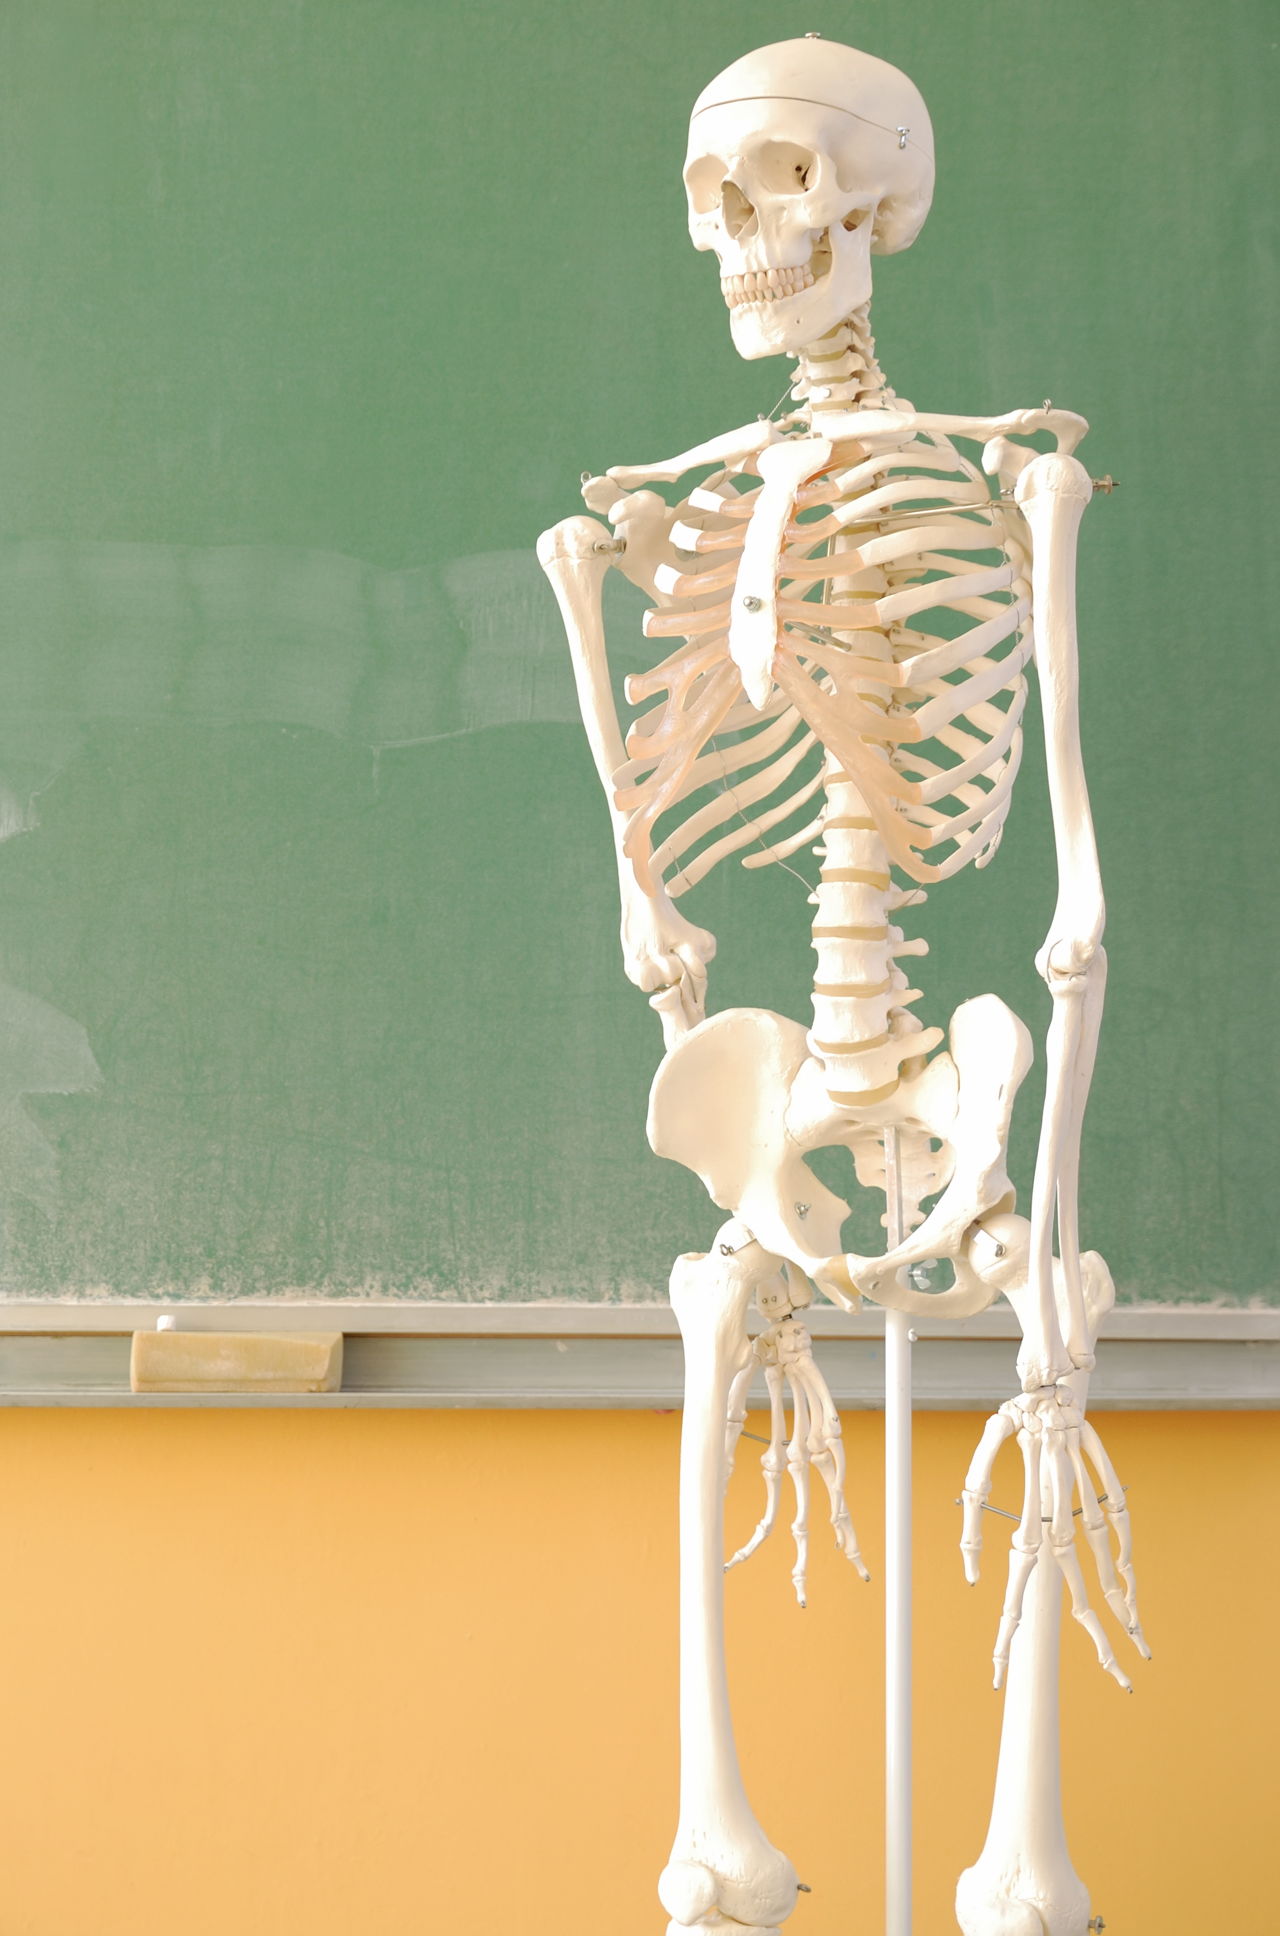 Skeleton | Body organs, Human body systems, Body systems